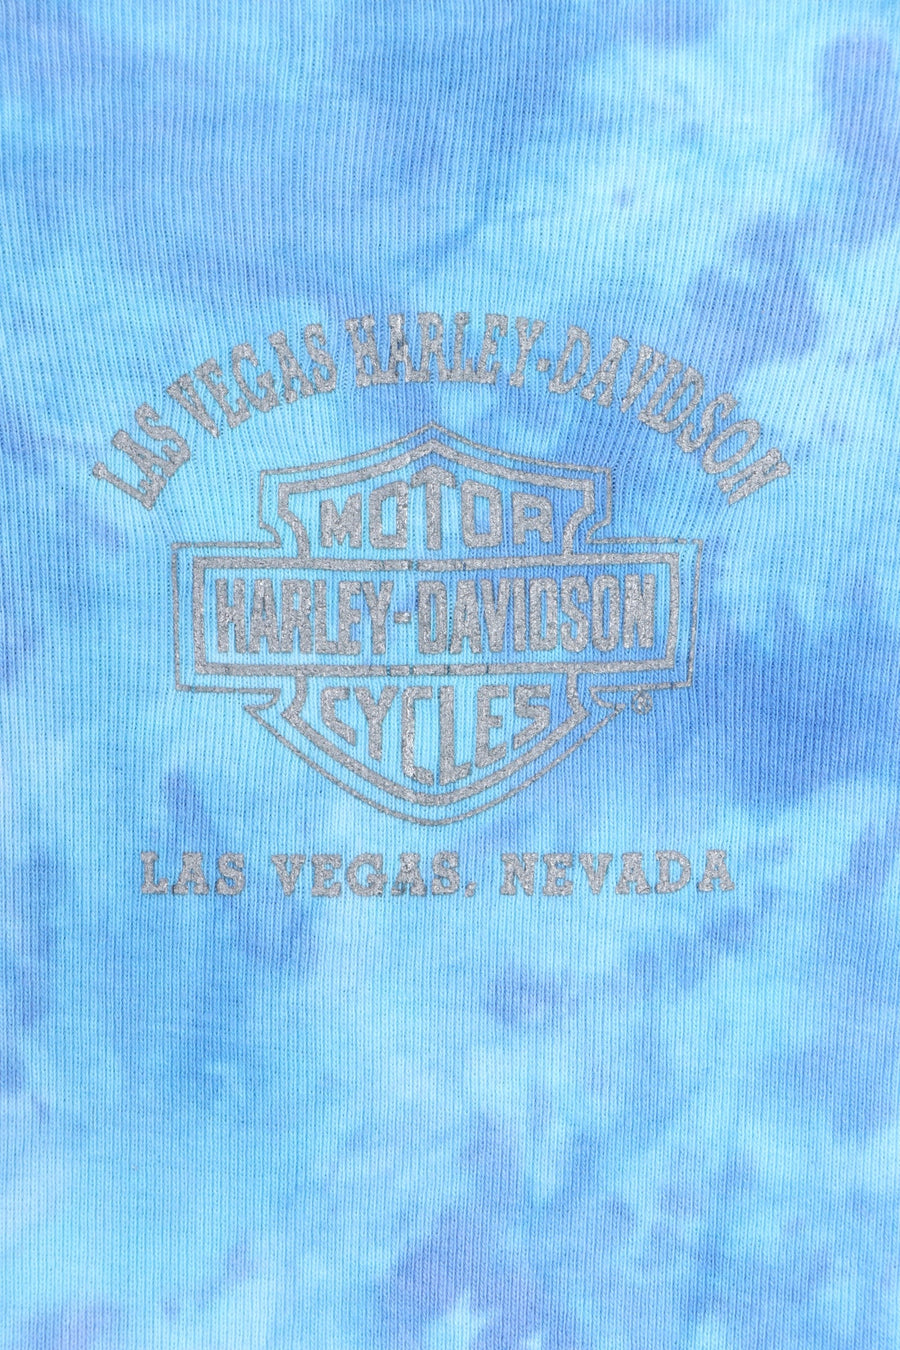 HARLEY DAVIDSON Las Vegas Blue Tie Dye Long Sleeve Tee (Women's S)